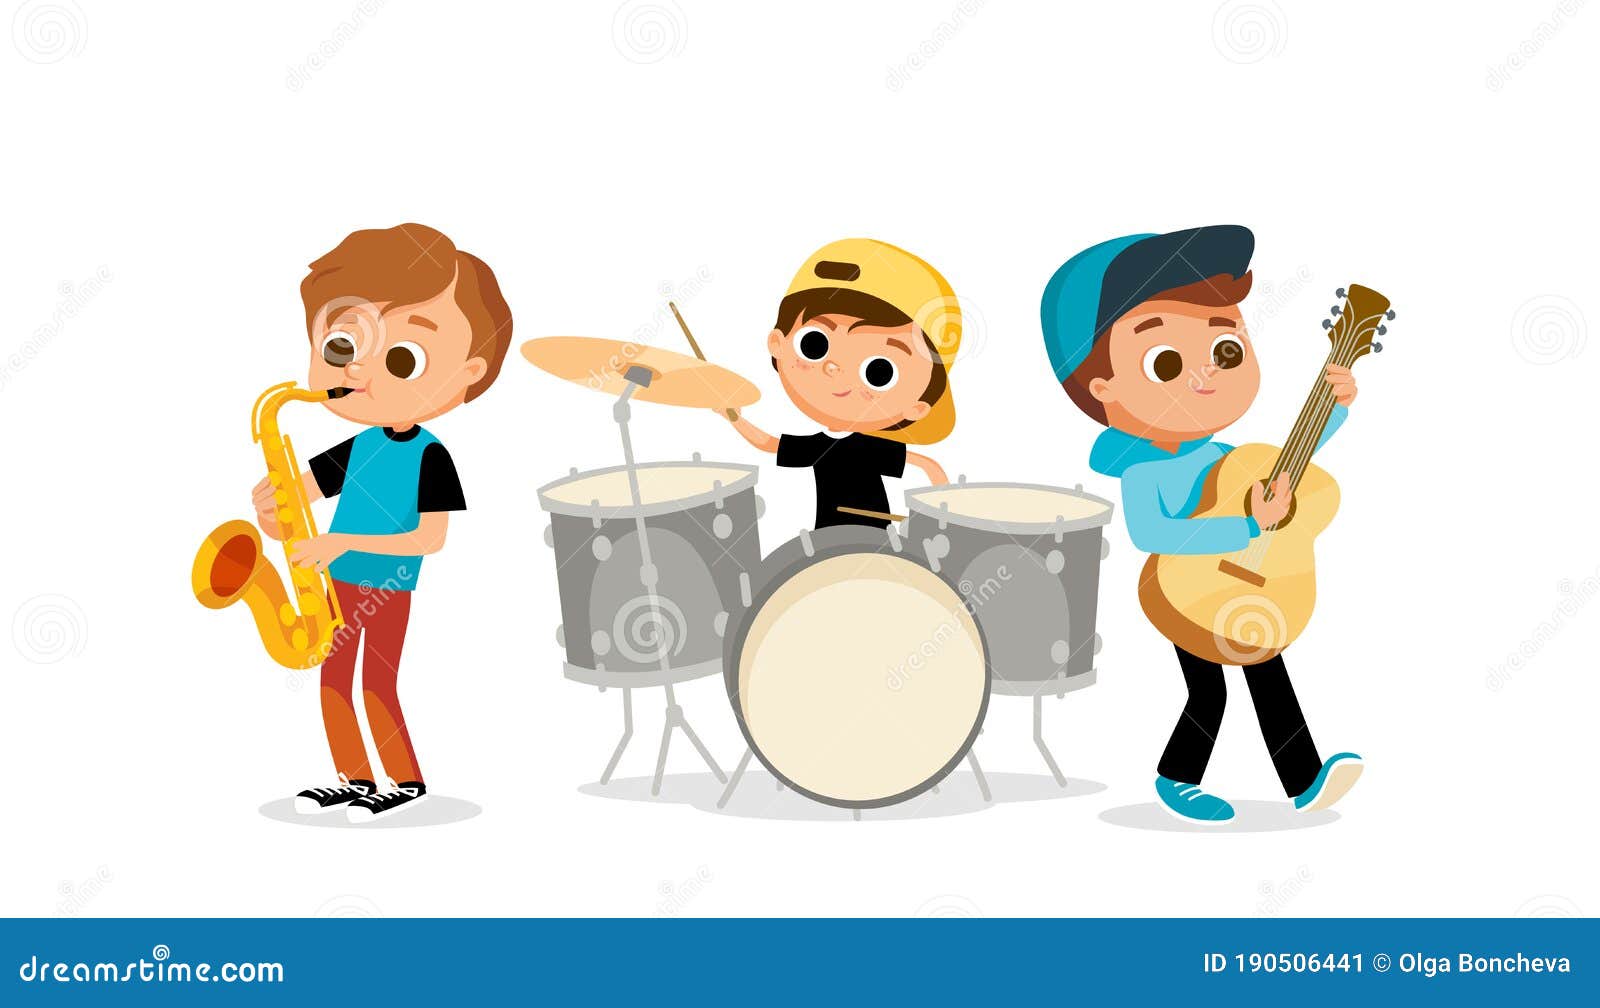 Cartoon Kids Playing Instruments